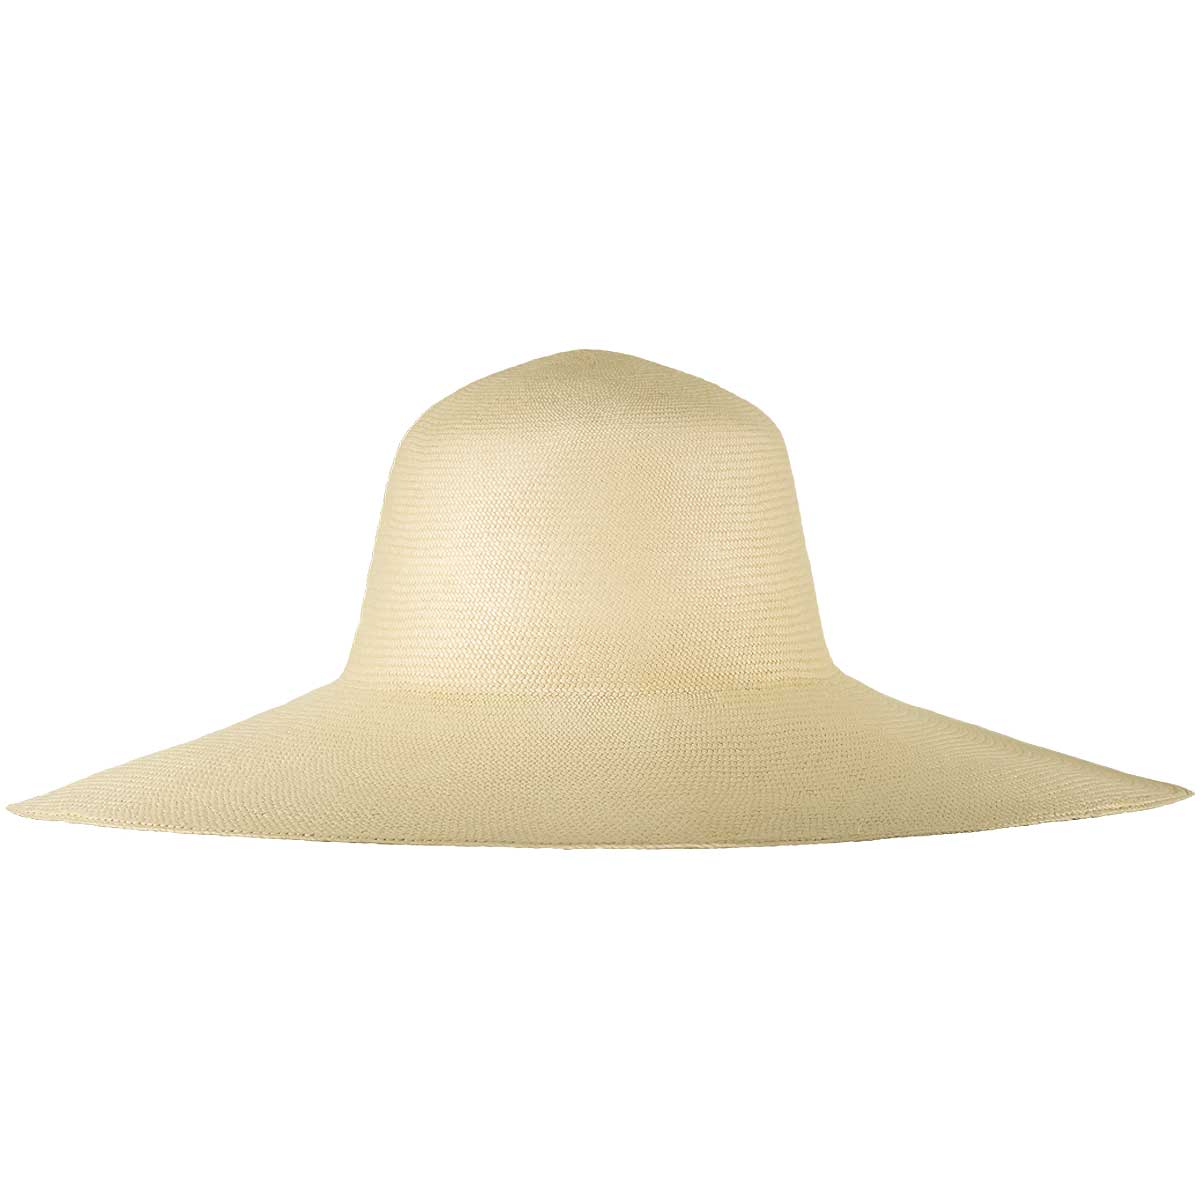 Travel Hat Bag – MonPanama, Panama Hats, Toquilla Hats